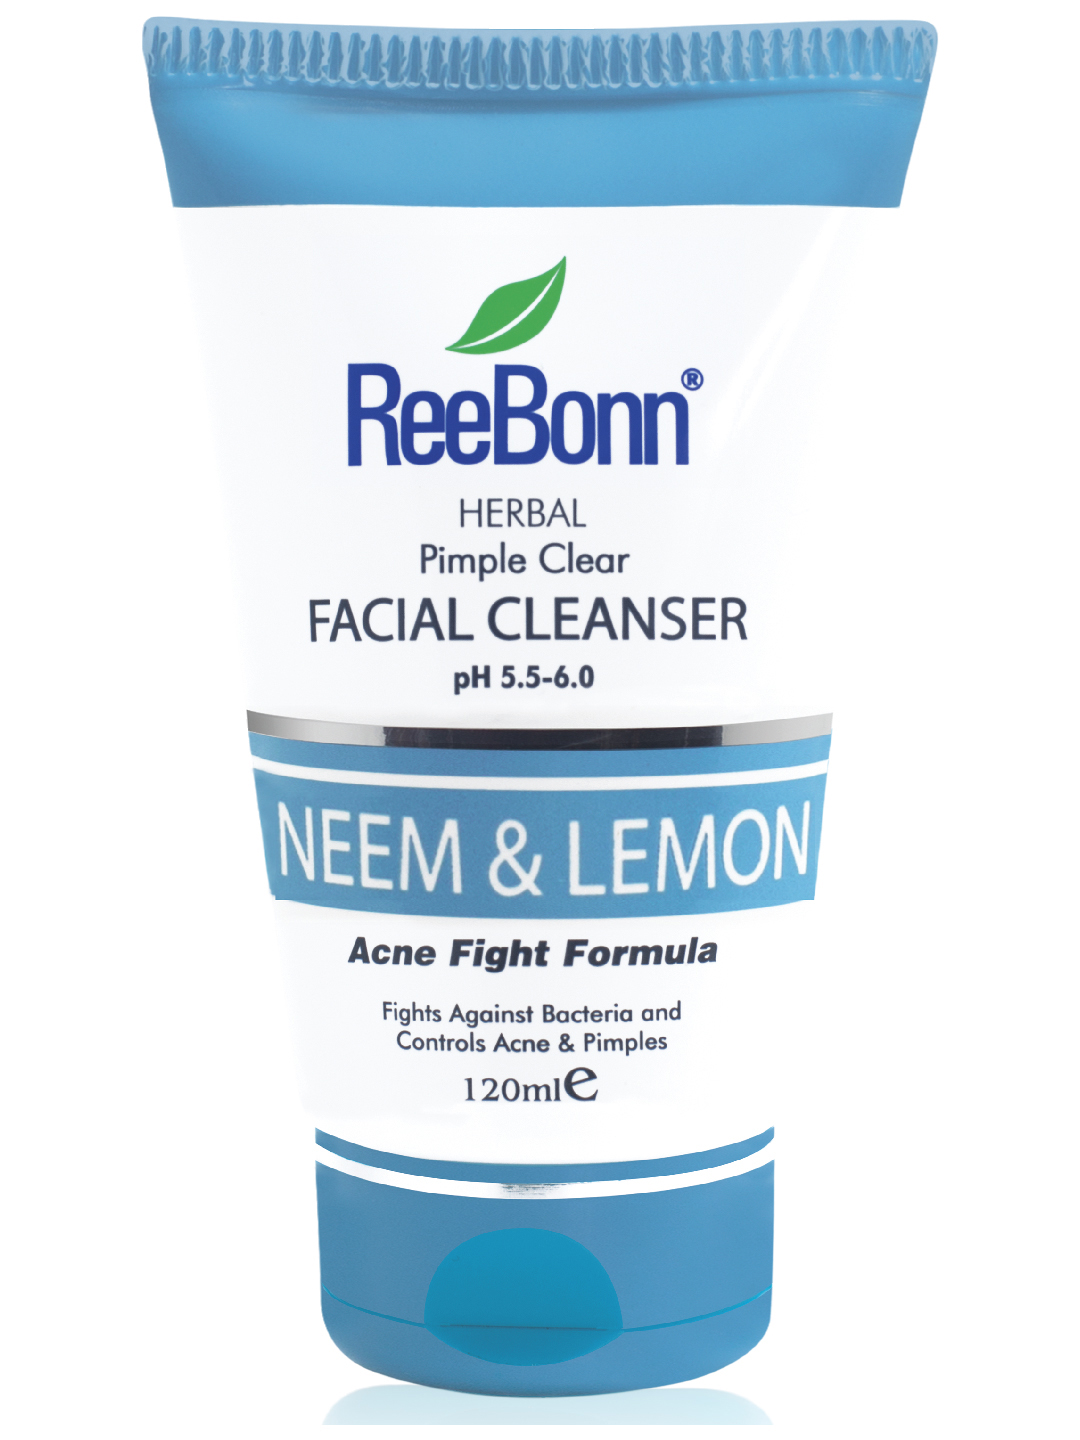 Pimple Clear Facial Cleanser - 120g